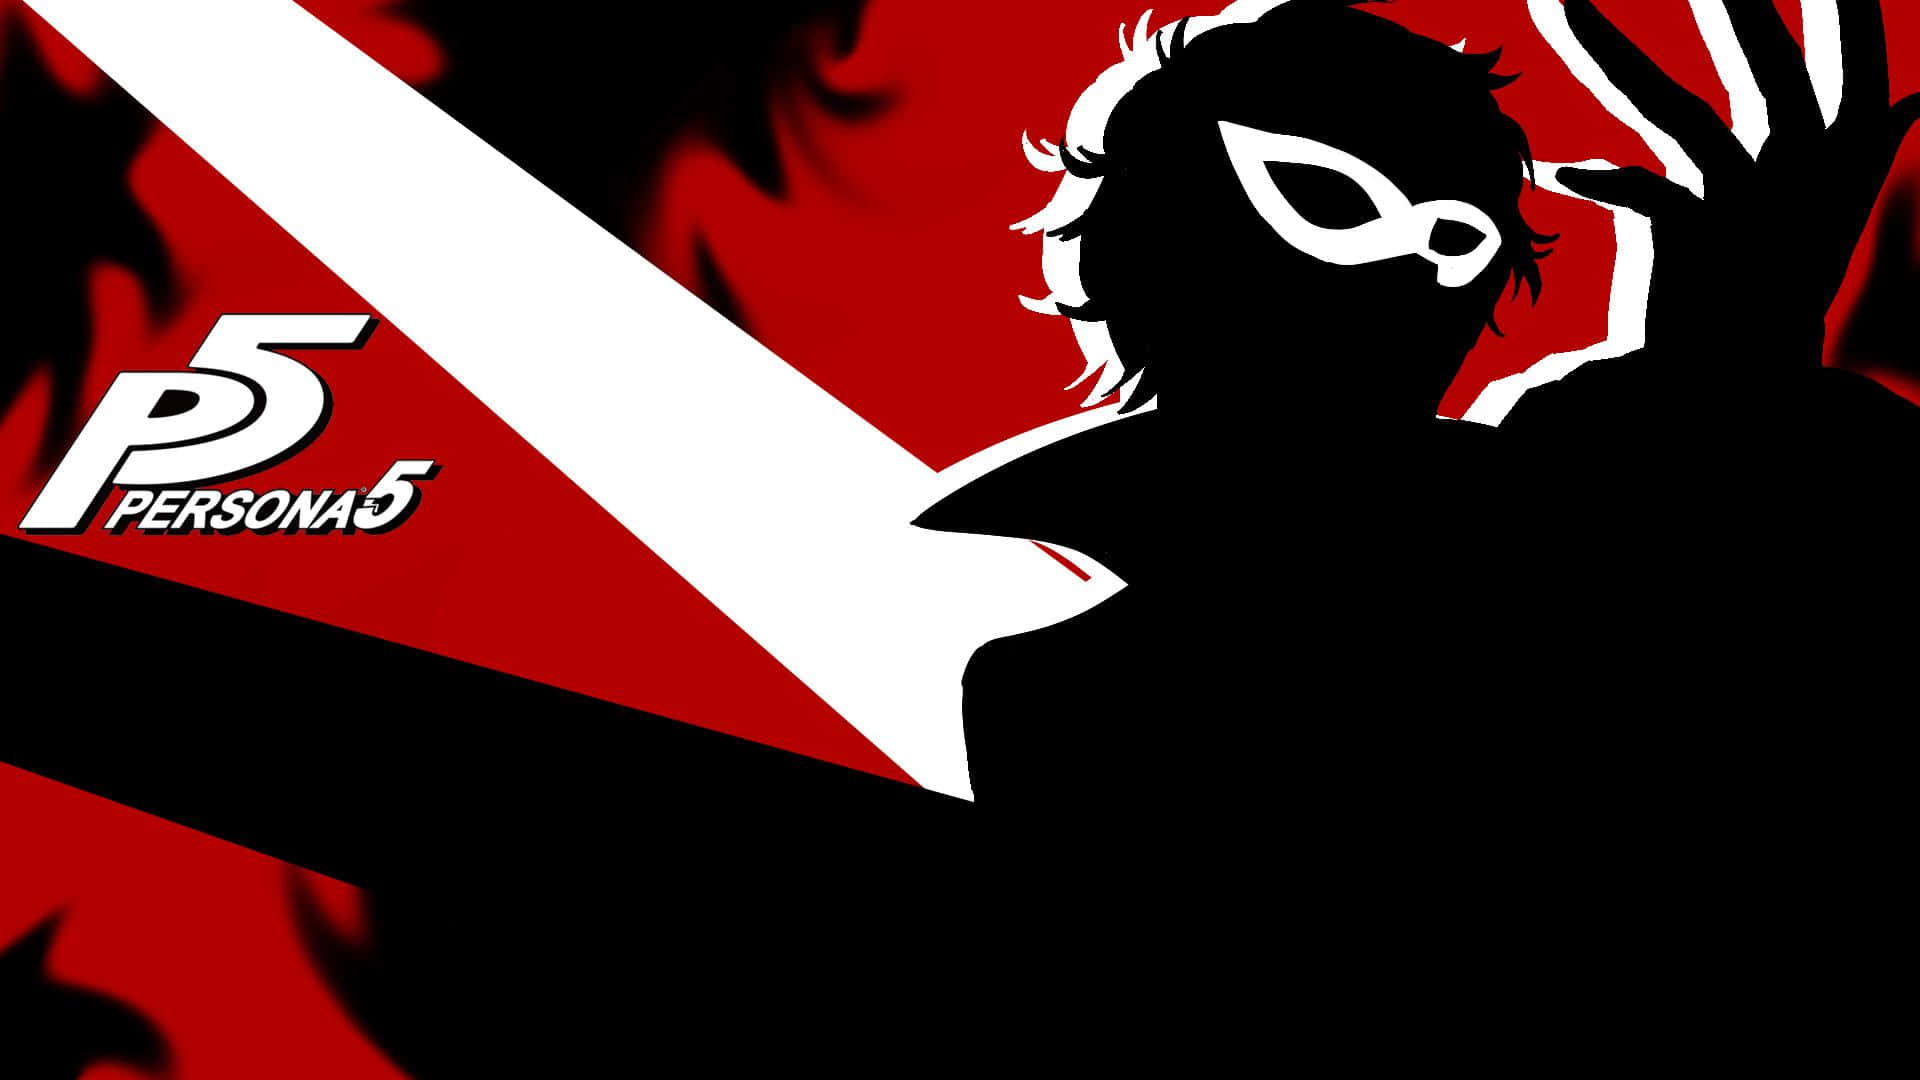 Joker Persona 5 Sort og Rød Minimalistisk Baggrund Wallpaper